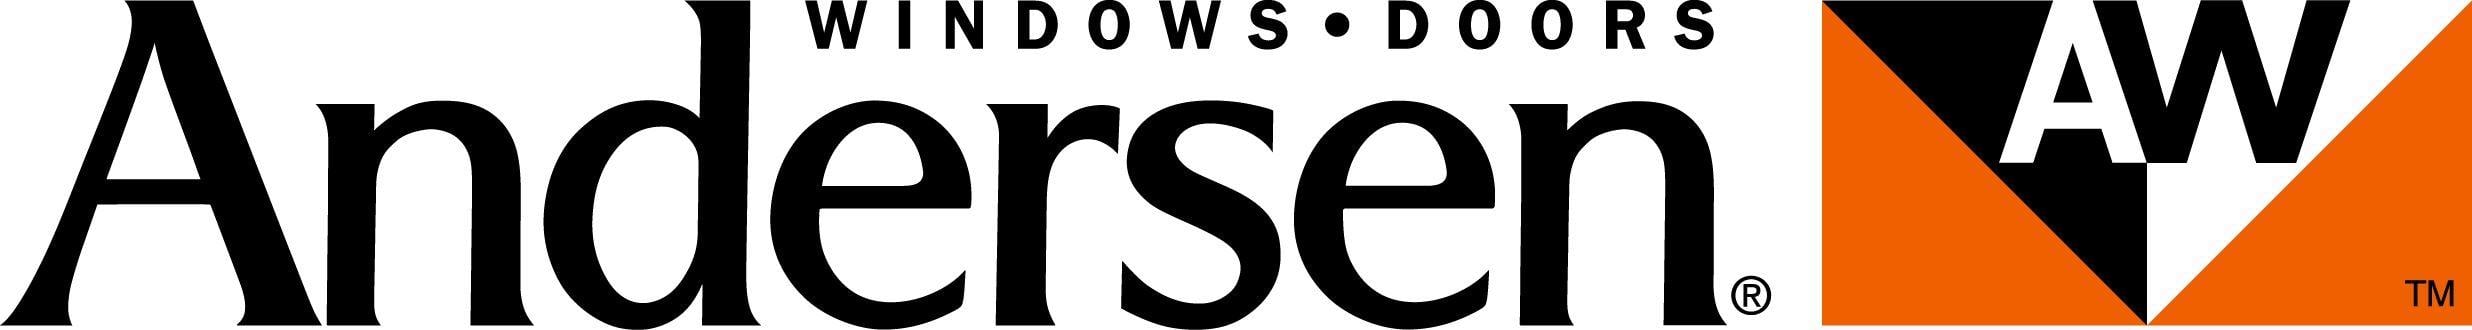 Anderson Logo - Anderson-Windows-Doors-Logo | Crown Roofing & Contracting